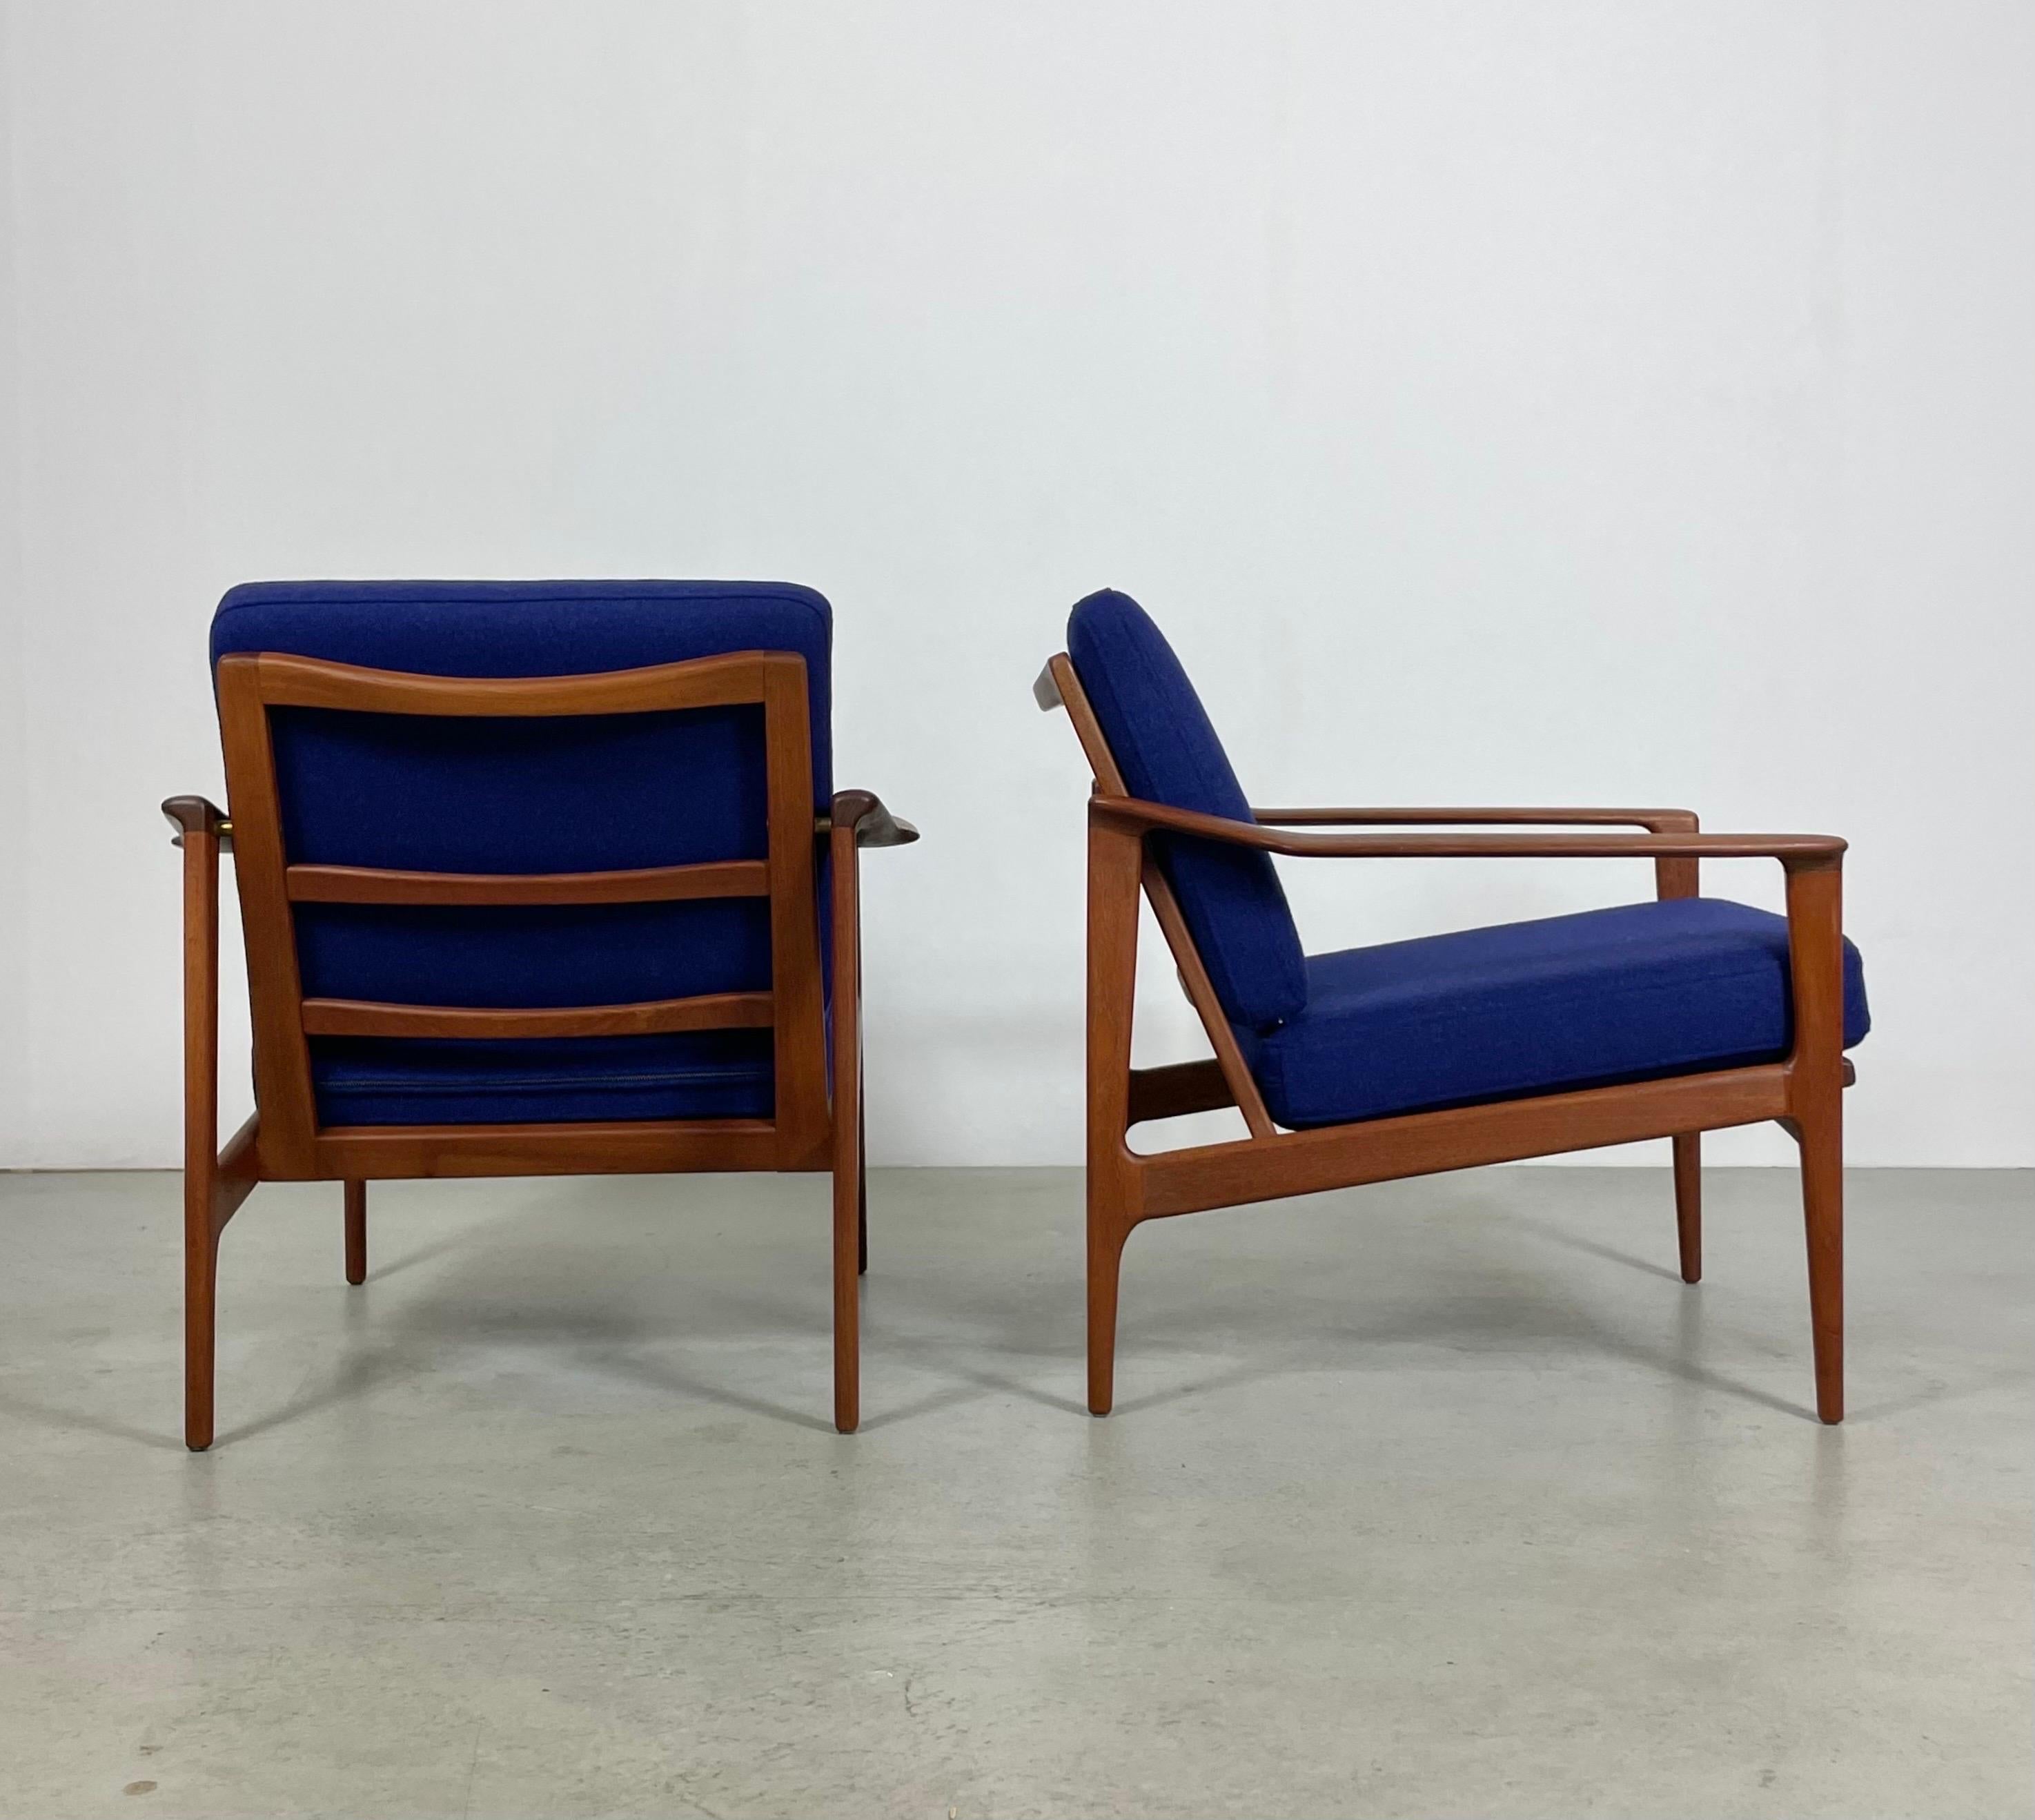 2x Mid-Century Teak Easy Chair by Ib Kofod-Larsen 1960s Denmark For Sale 11